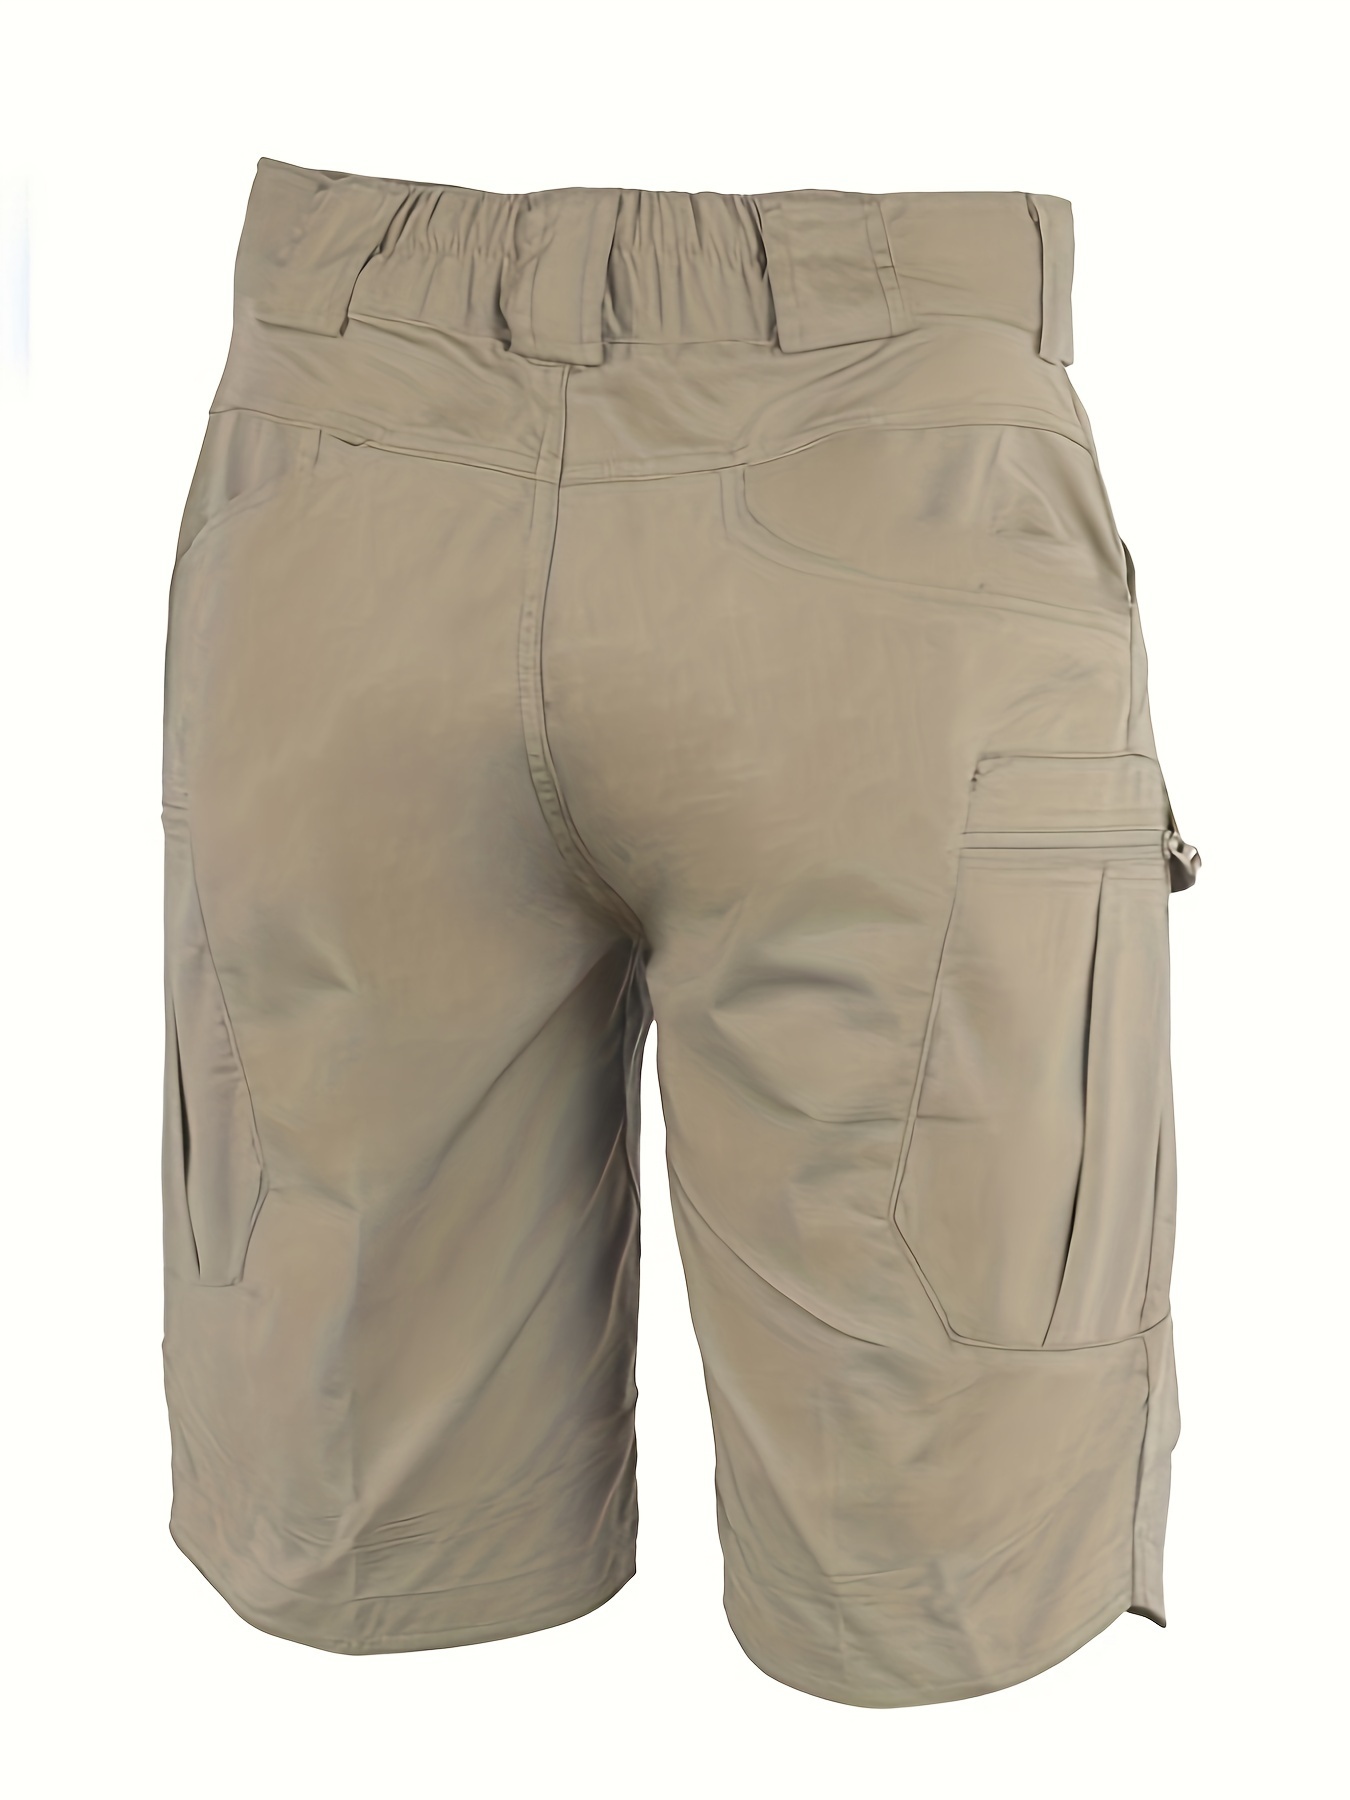 Men Urban Tactical quick dry Pants large pocket scratch-resistant